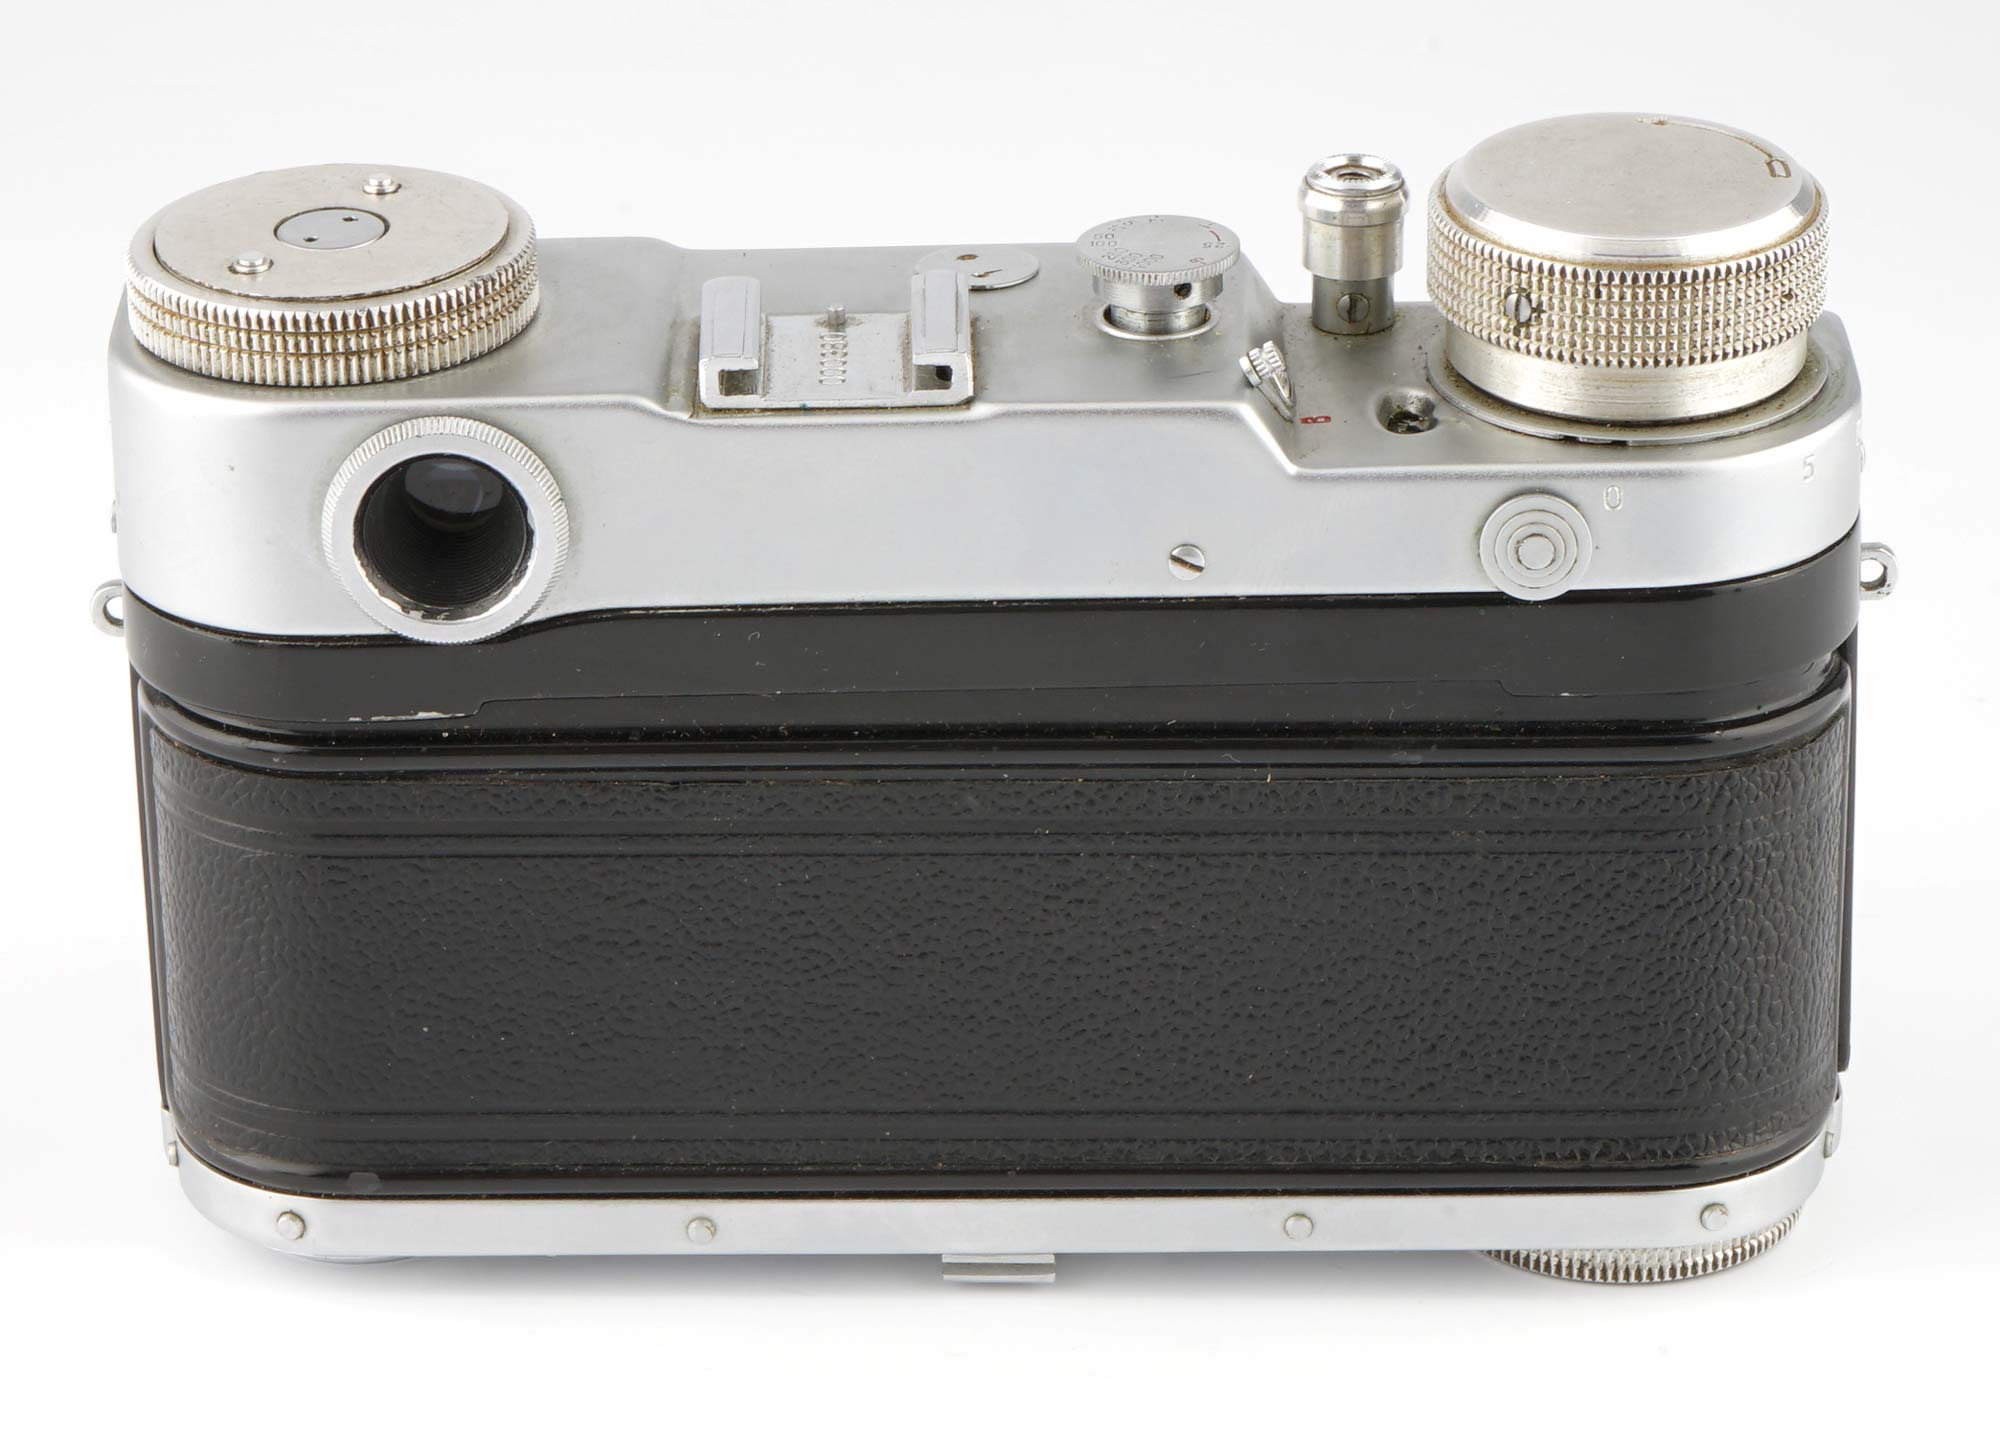 Gomz Leningrad Rangefinder camera Leica mount 000380